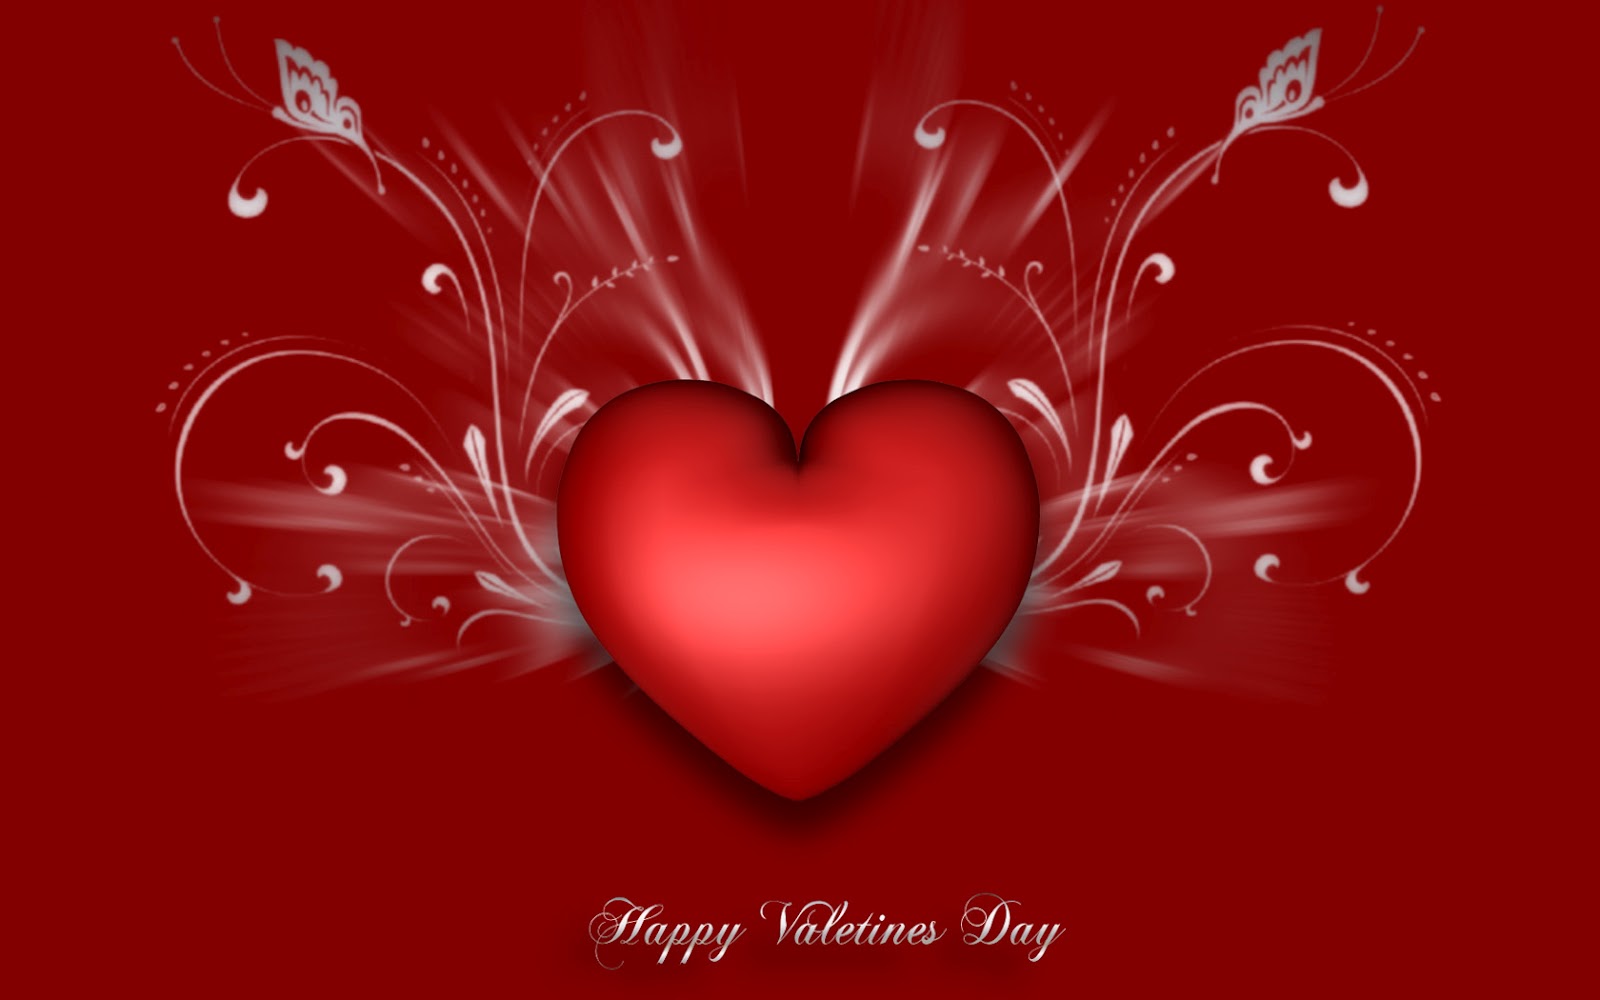 http://3.bp.blogspot.com/-NYPkOfKcx4U/Ty-OnDXojCI/AAAAAAABoWk/Nh4B1vn8GhI/s1600/valentines+day+2012+gifts+(75).jpg